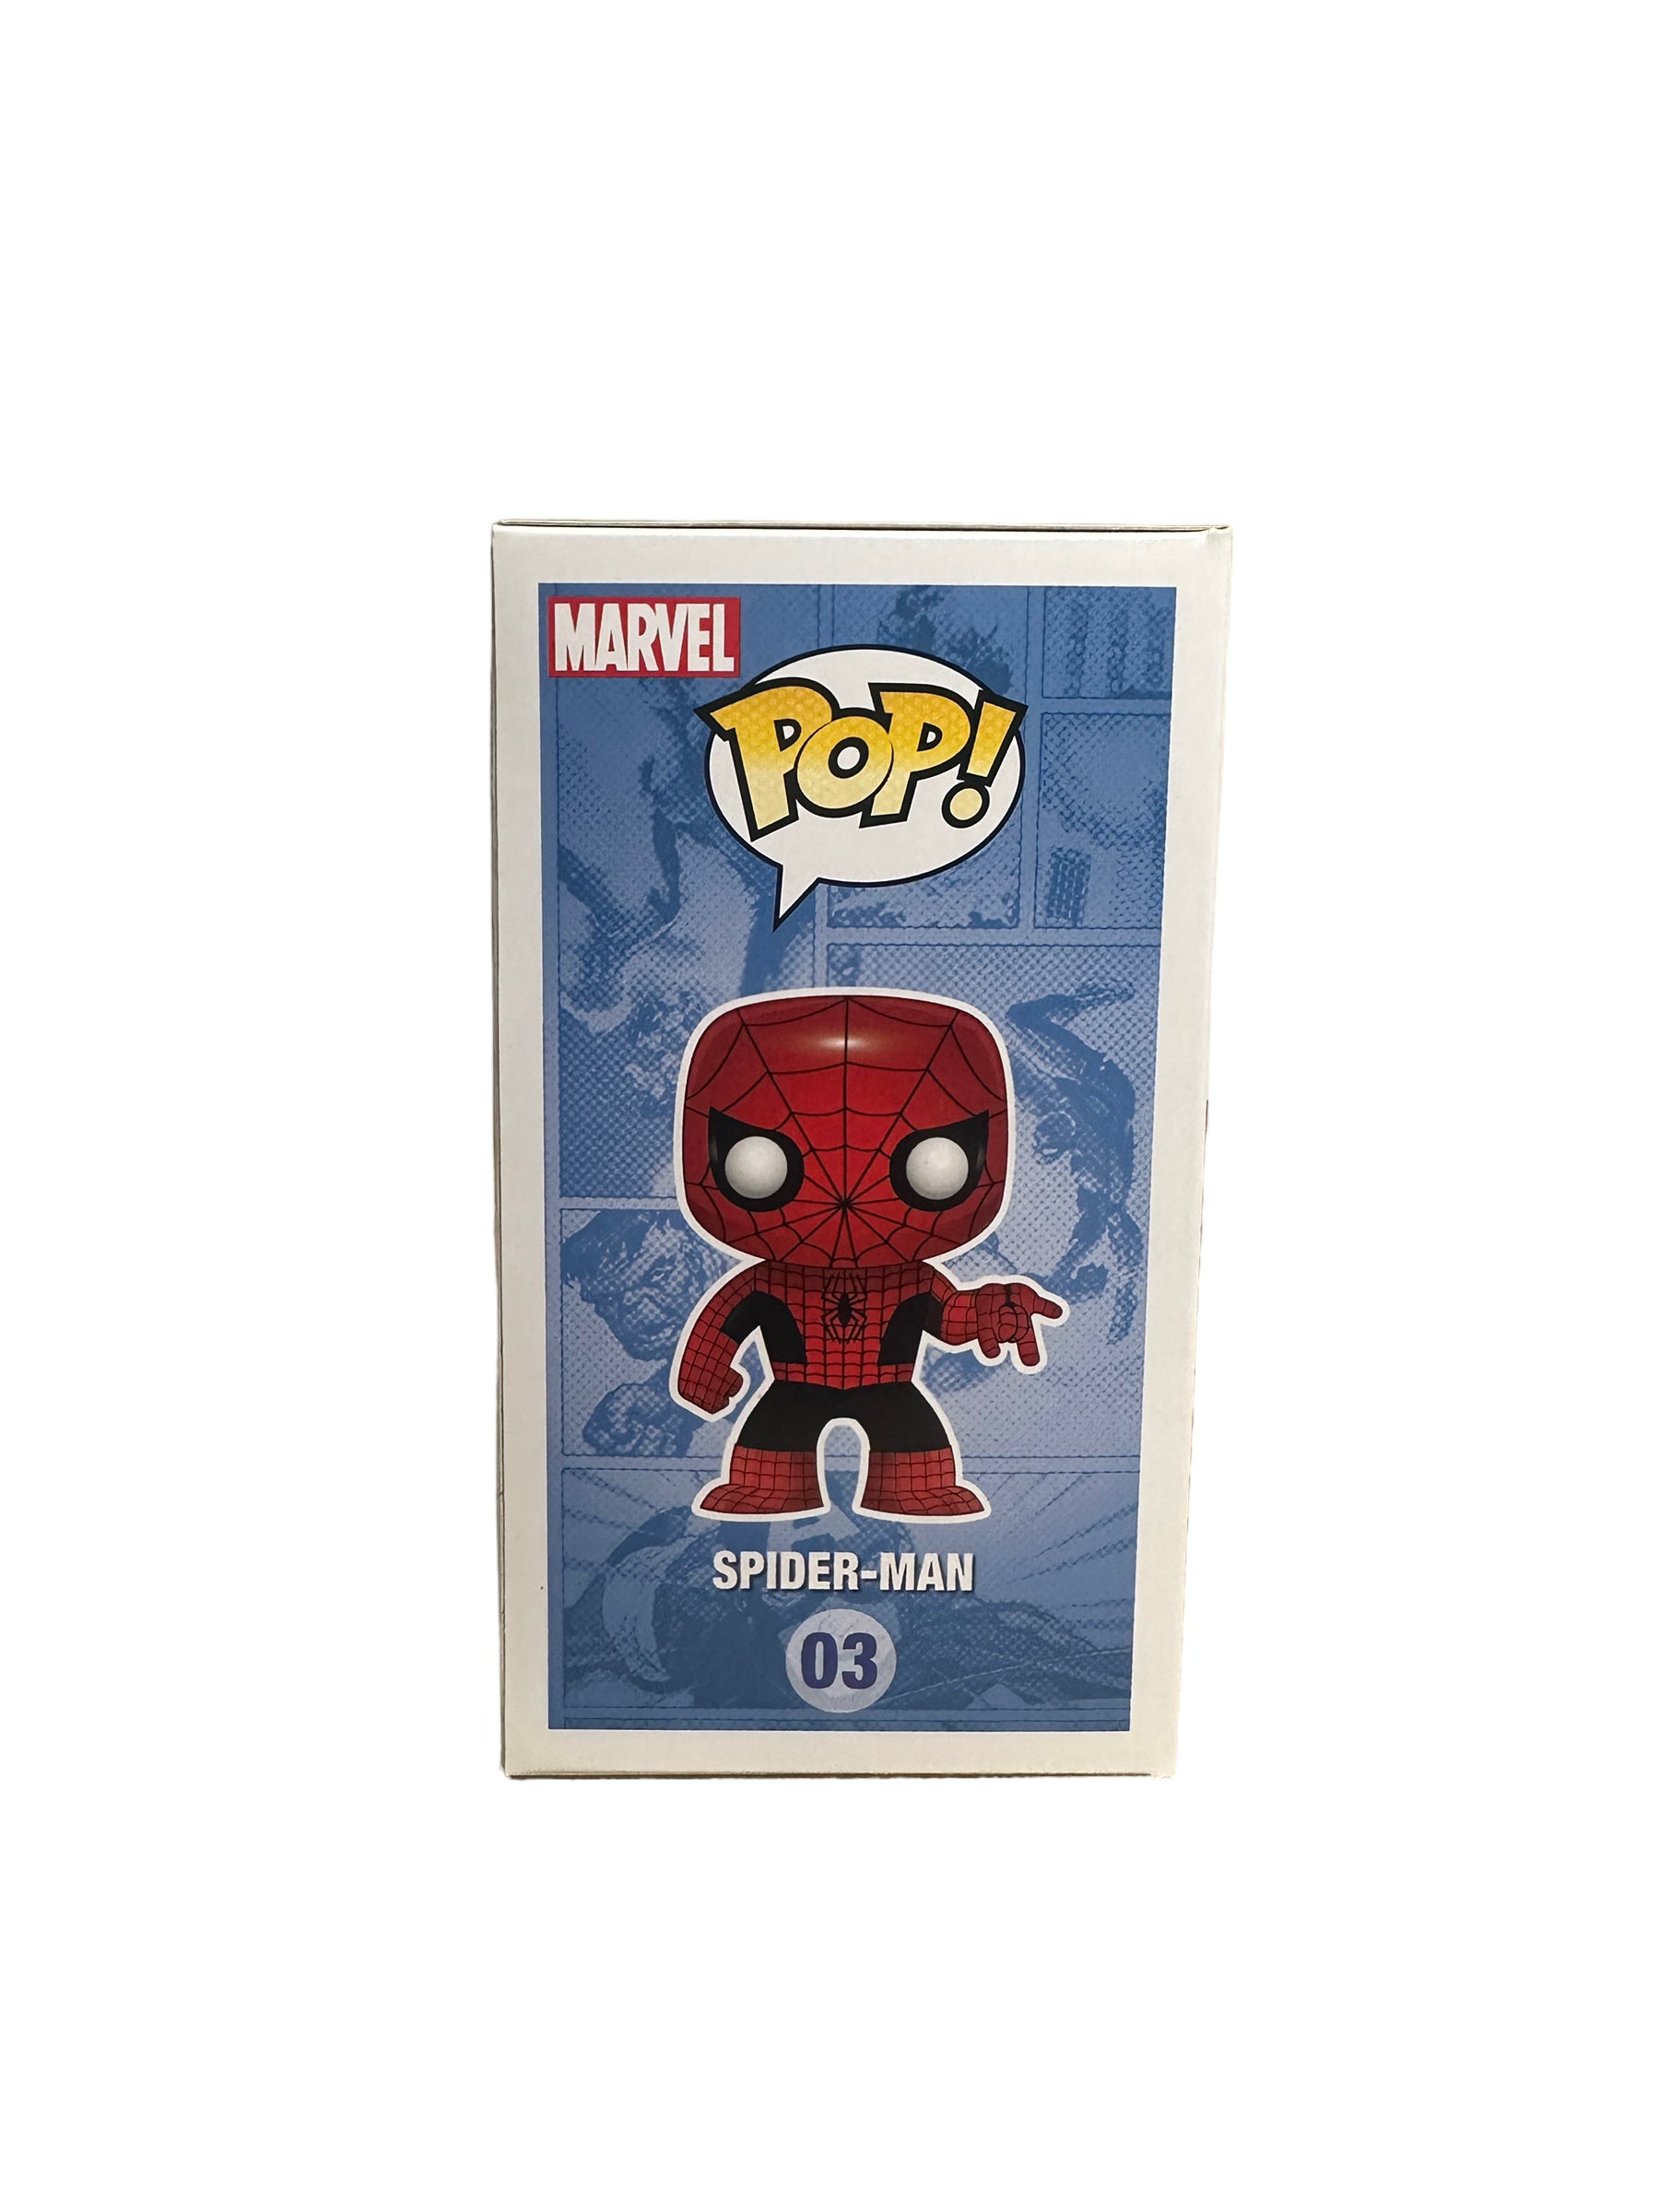 Spider-Man #03 (Red / Black Suit) Funko Pop! - Marvel - 2016 Pop! - Condition 8.75/10